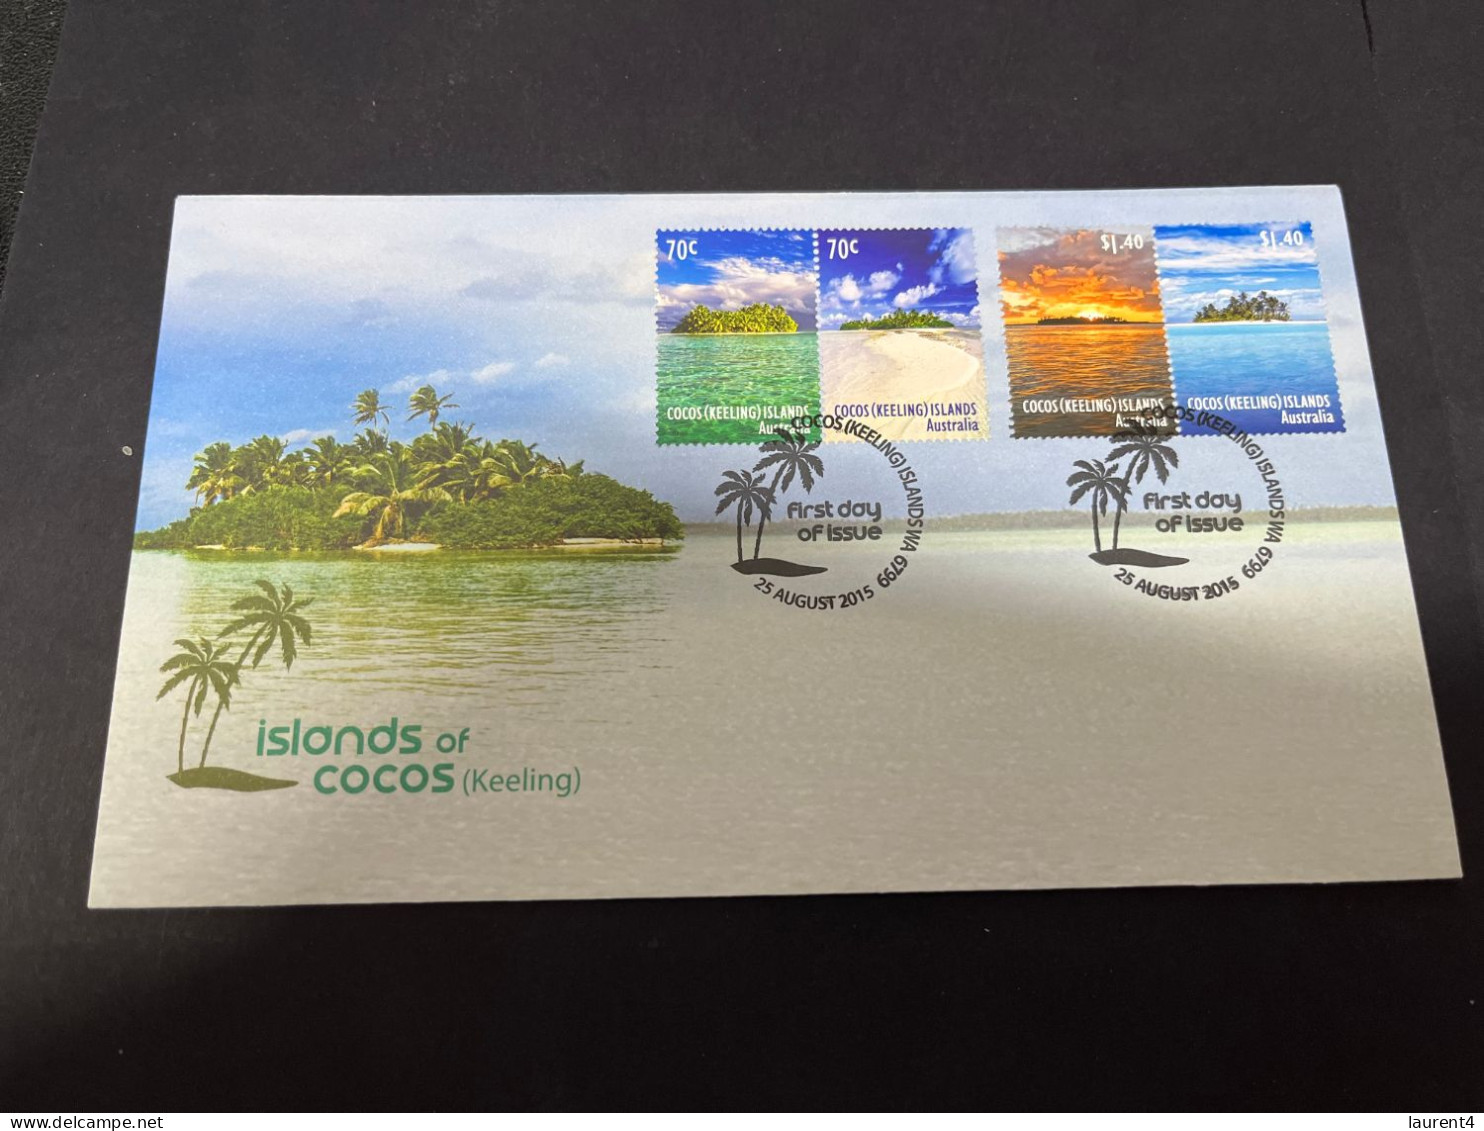 4-1-2024 (4 W 17) Australia FDC - Cocos (Keeling) Islands - 2015 - Cocos (Keeling) Islands